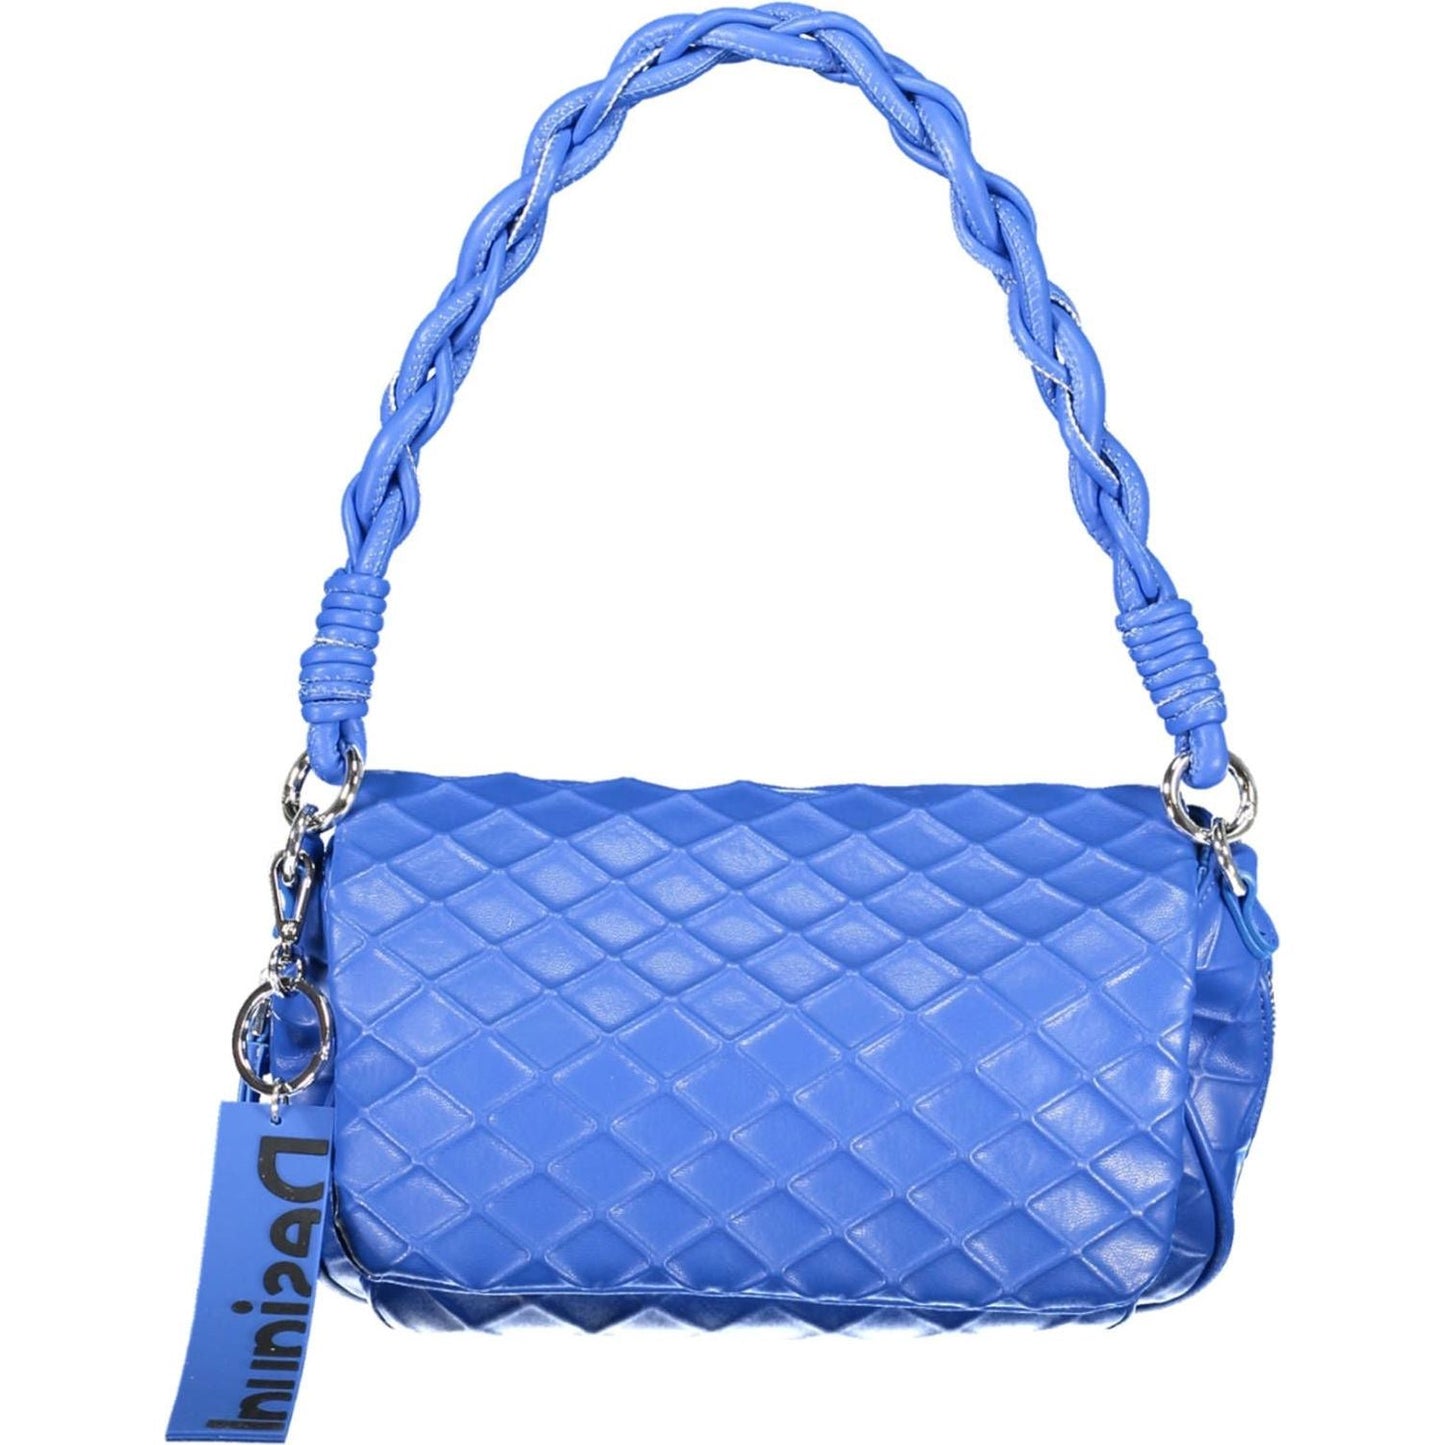 Desigual Chic Expandable Blue Handbag with Contrasting Details chic-expandable-blue-handbag-with-contrasting-details